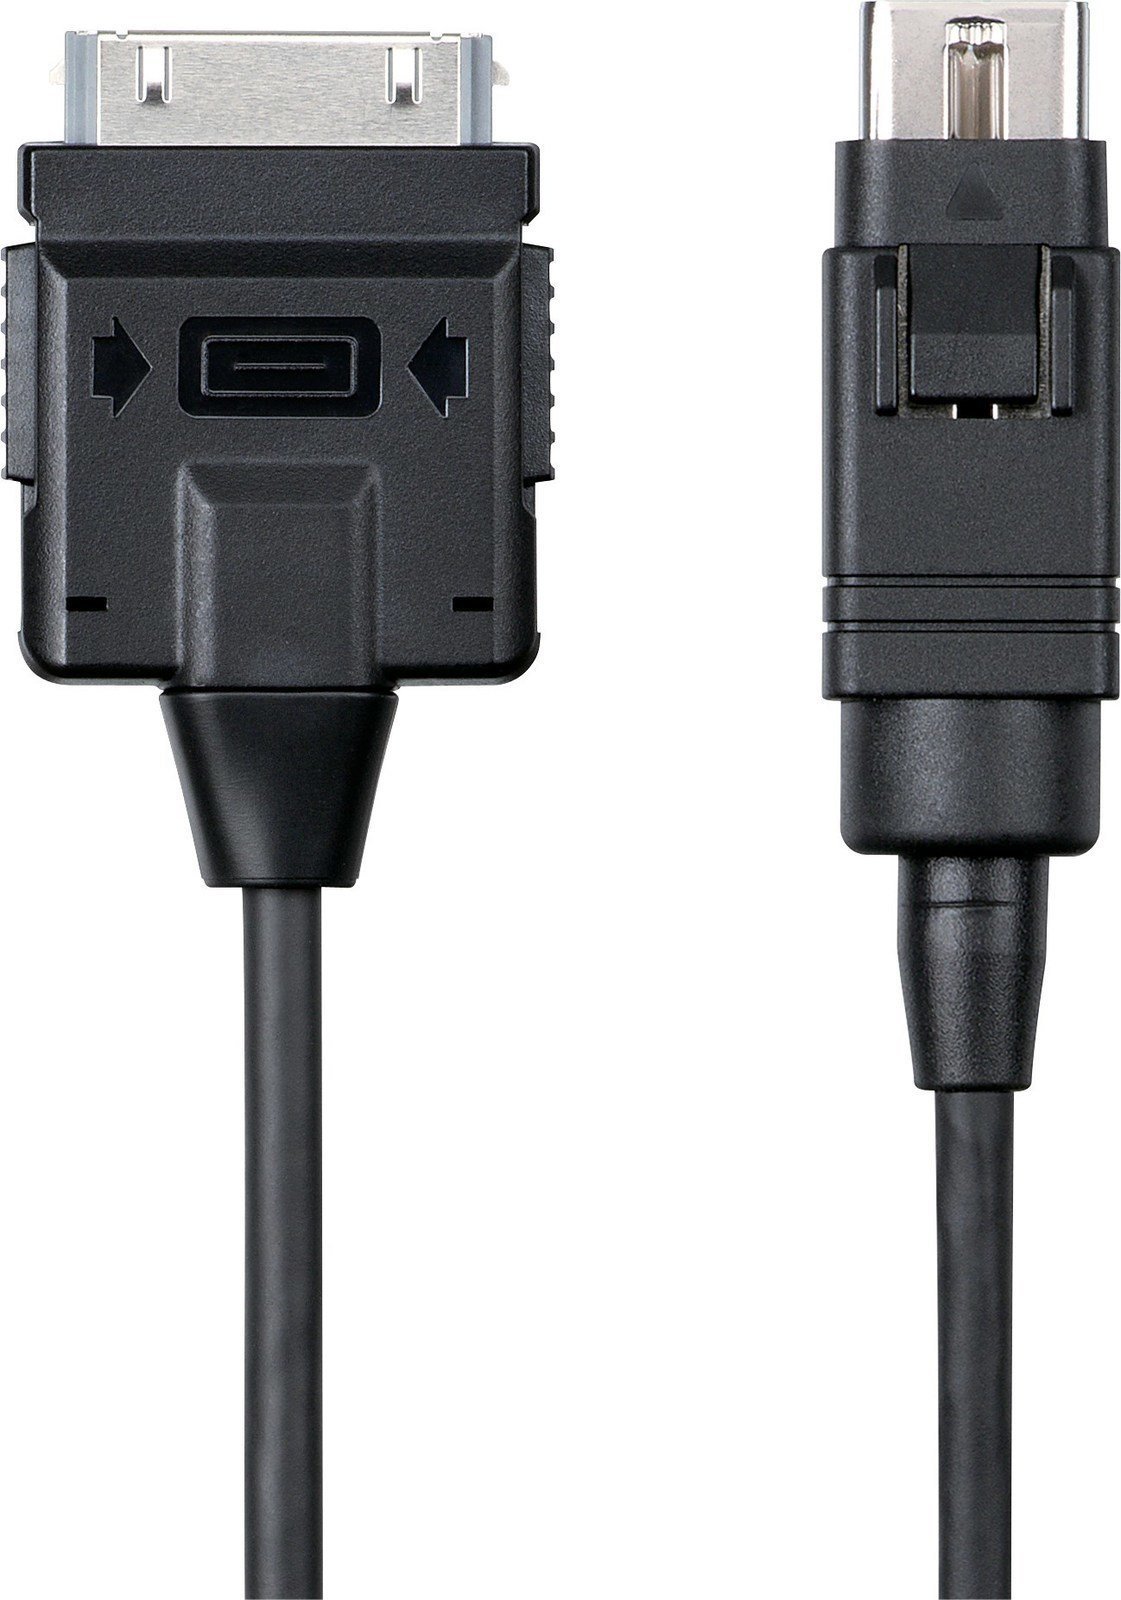 USB Cable Pioneer Dj DDJ-WECAI30 Black 50 cm USB Cable